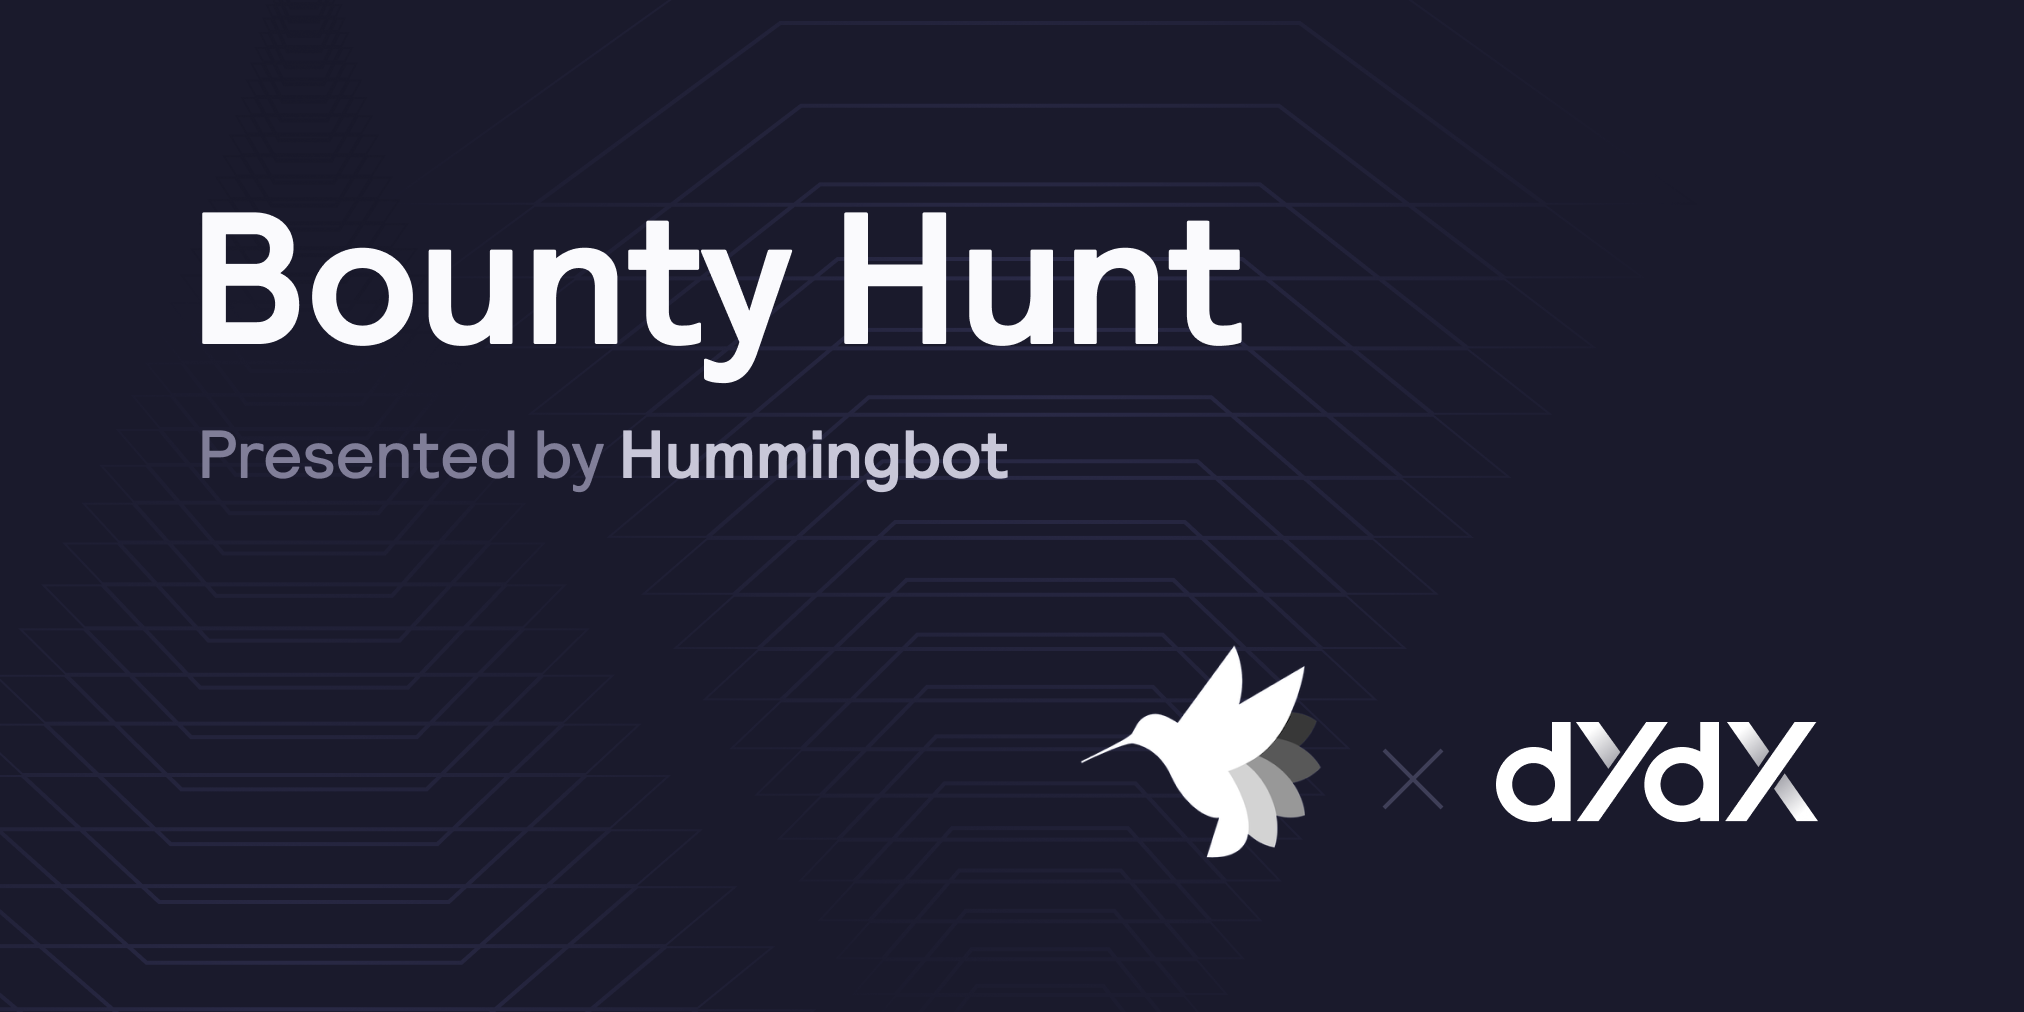 Hummingbot Bounty Hunt